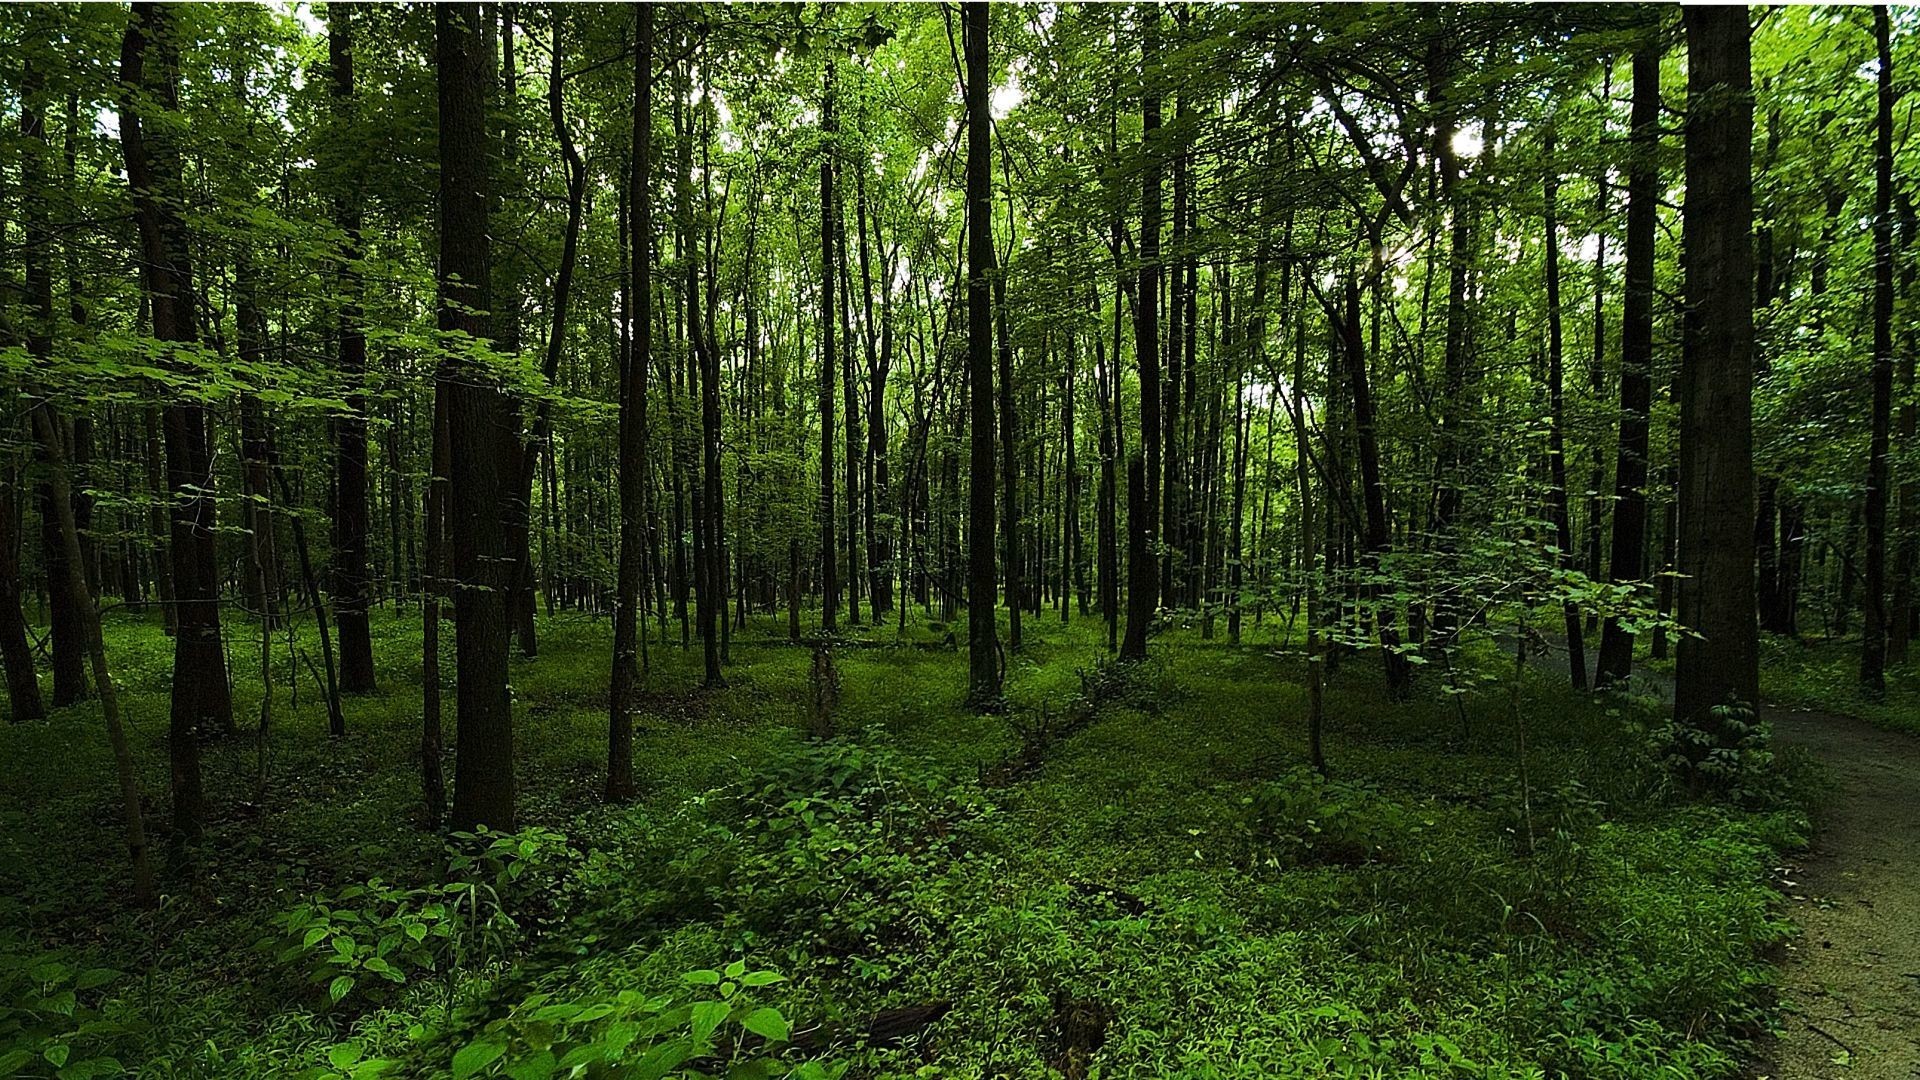 1920x1080 cropped-cropped-dark-green-forest-background-2.jpg